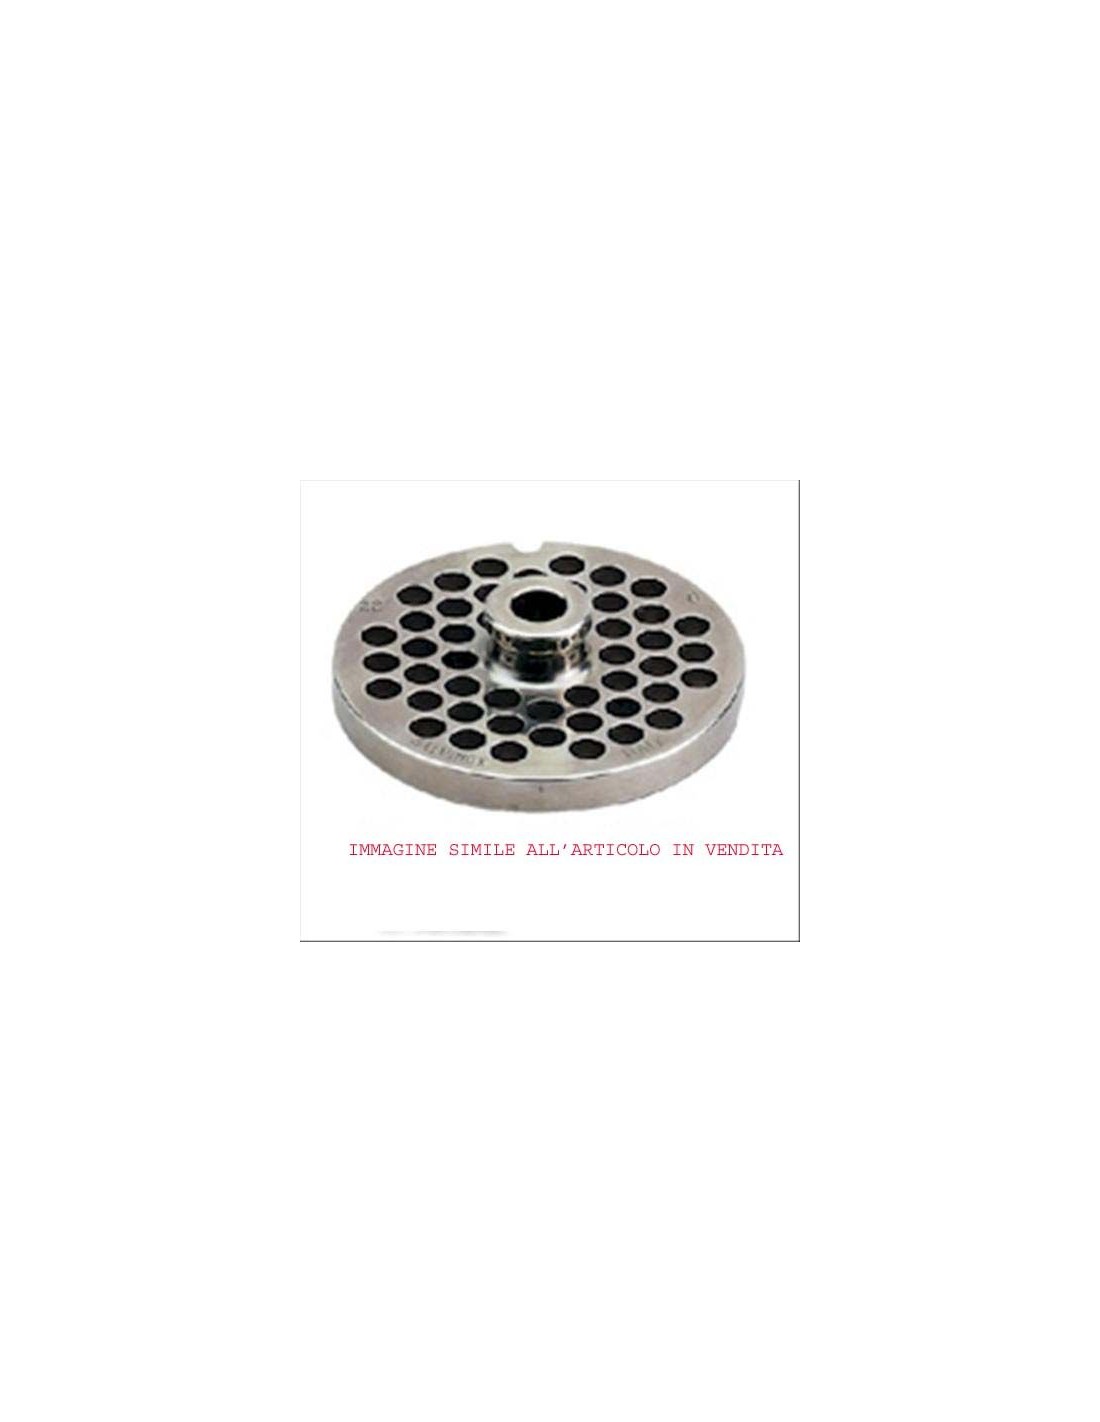 Plates mincer (enterprise) in self-sharpening stainless steel for meat grinder mod 22 - 6 mm diameter holes